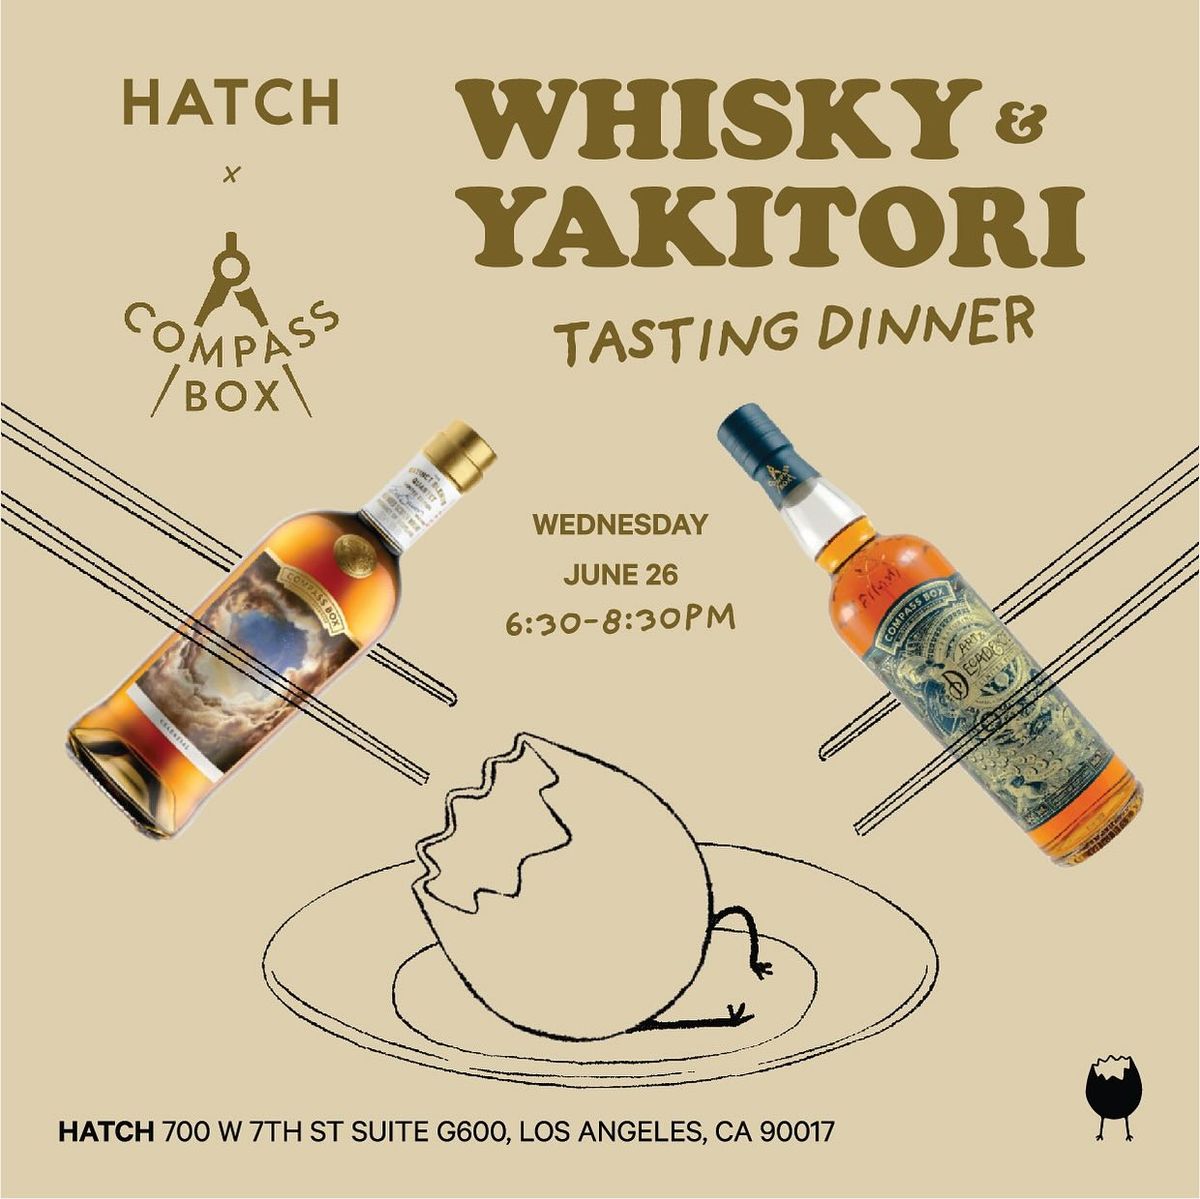 HATCH x Compass Box Whisky & Yakitori Tasting Dinner